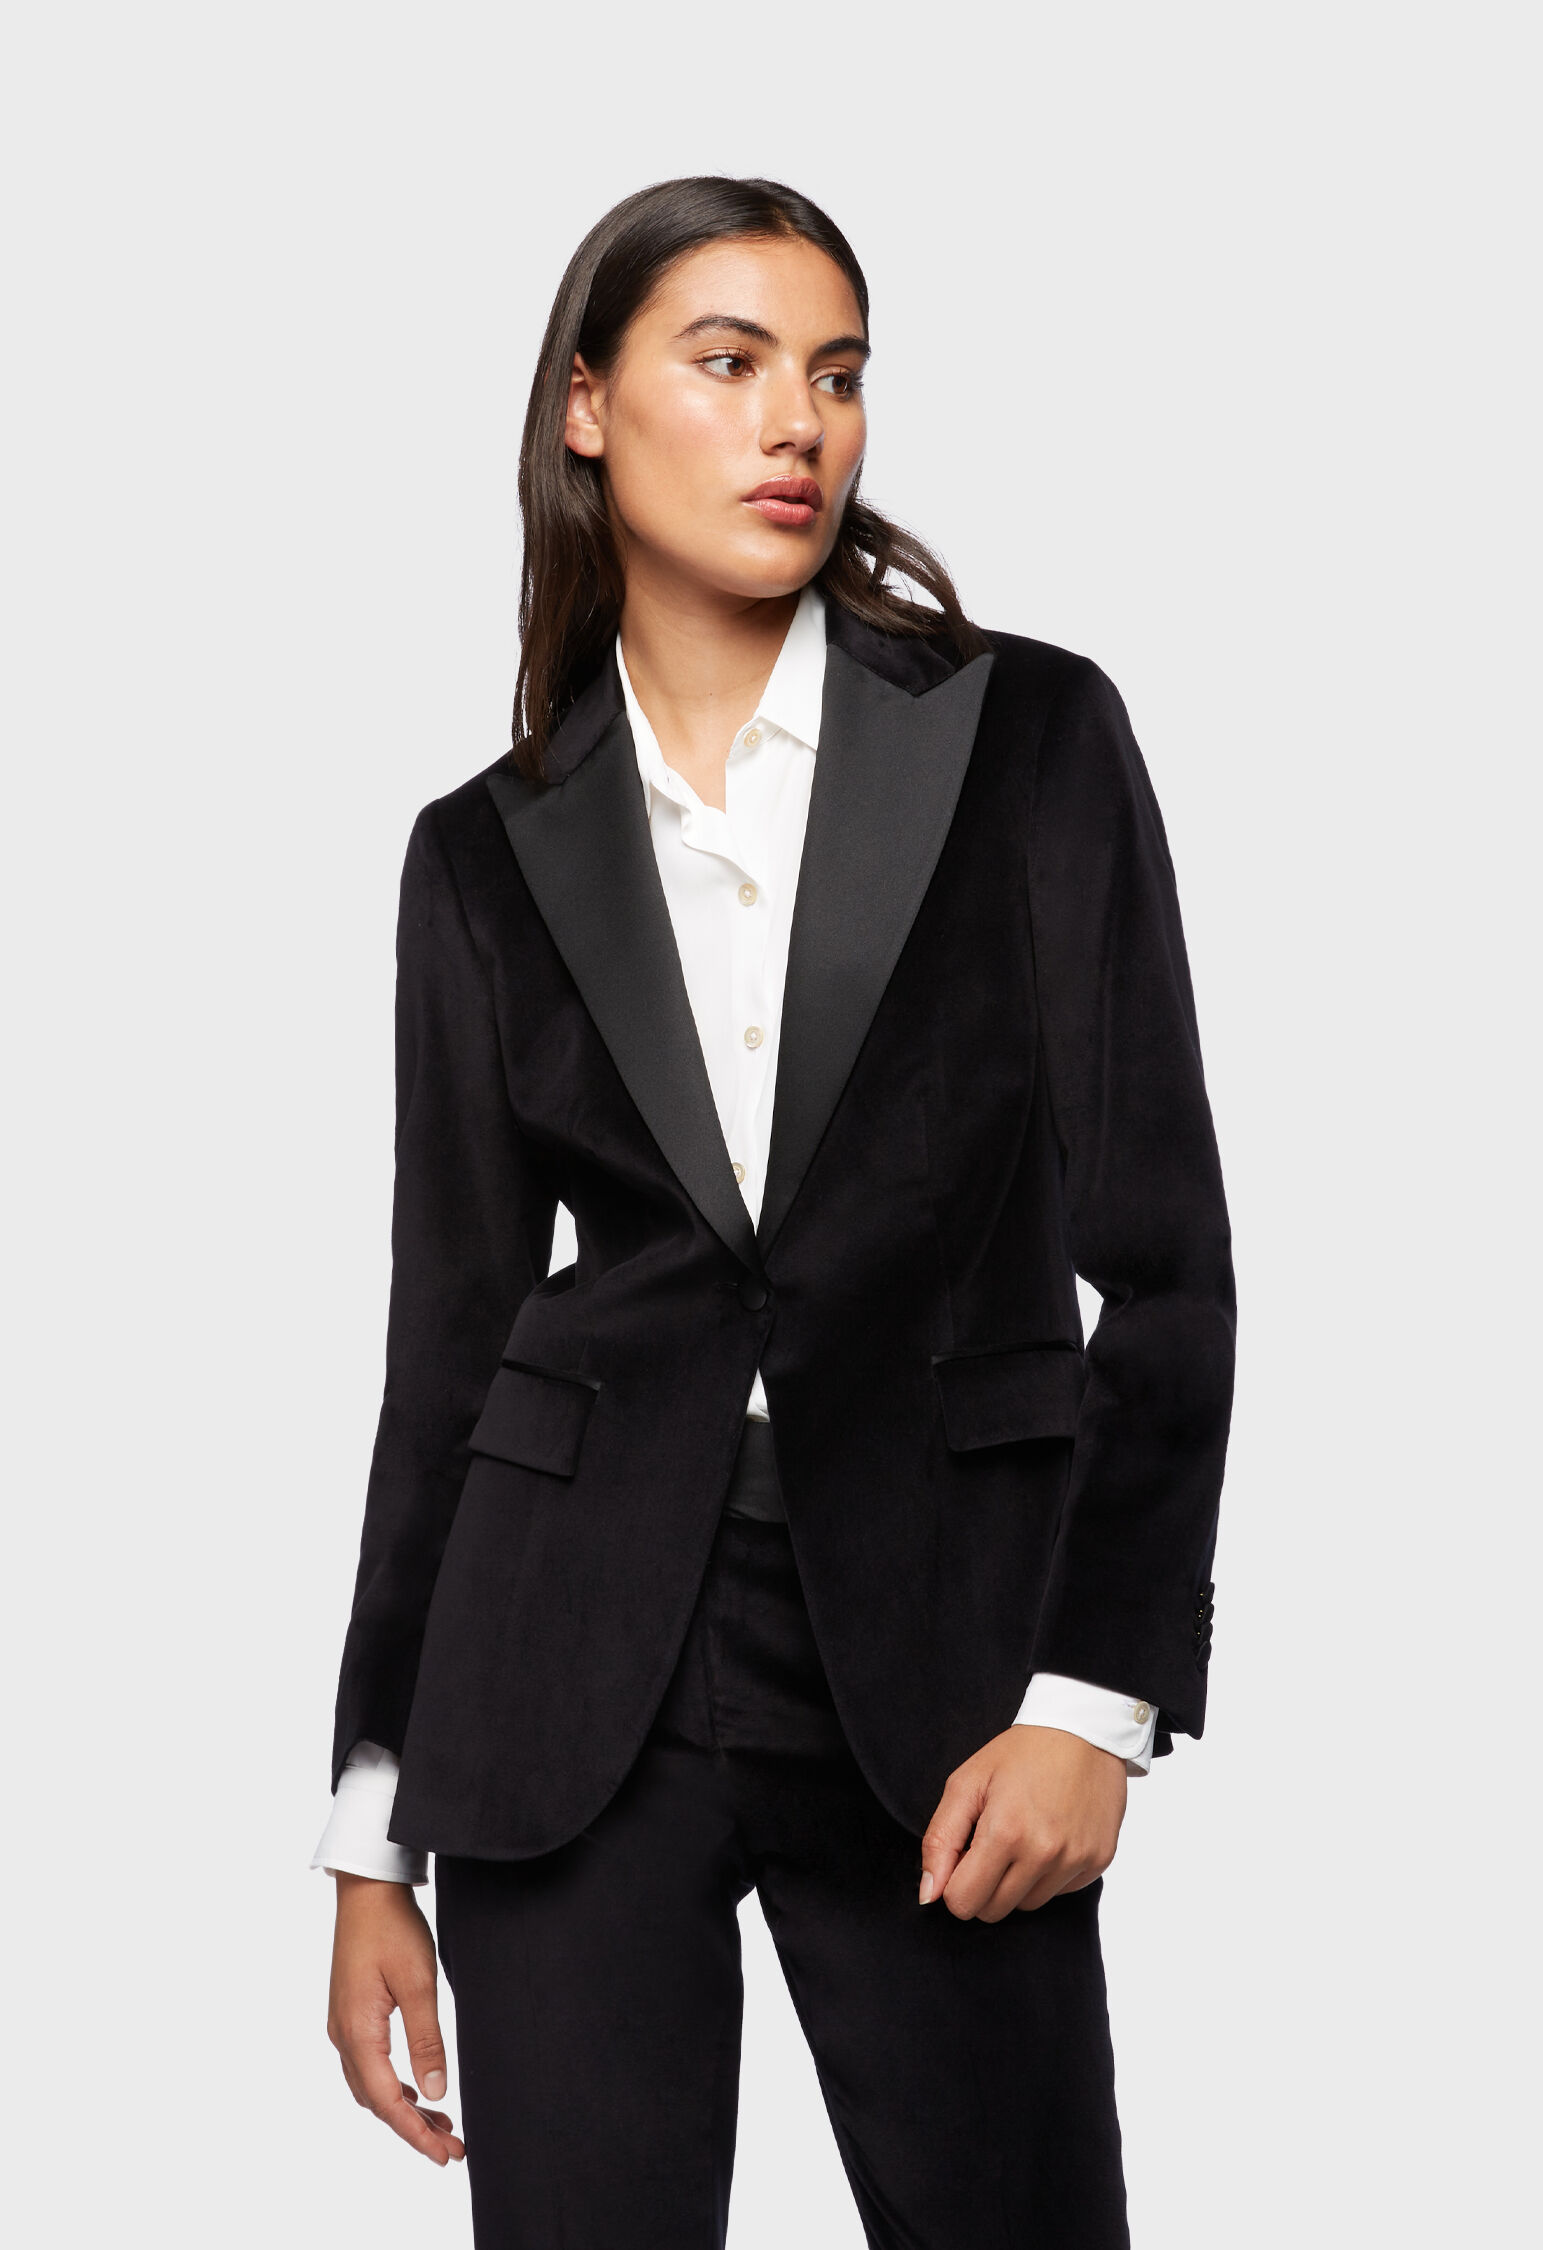 Amazoncom JYDress Womens 2Piece Velvet Trouser Suit Office Tuxedo  Ladies Work Wear Black  Clothing Shoes  Jewelry